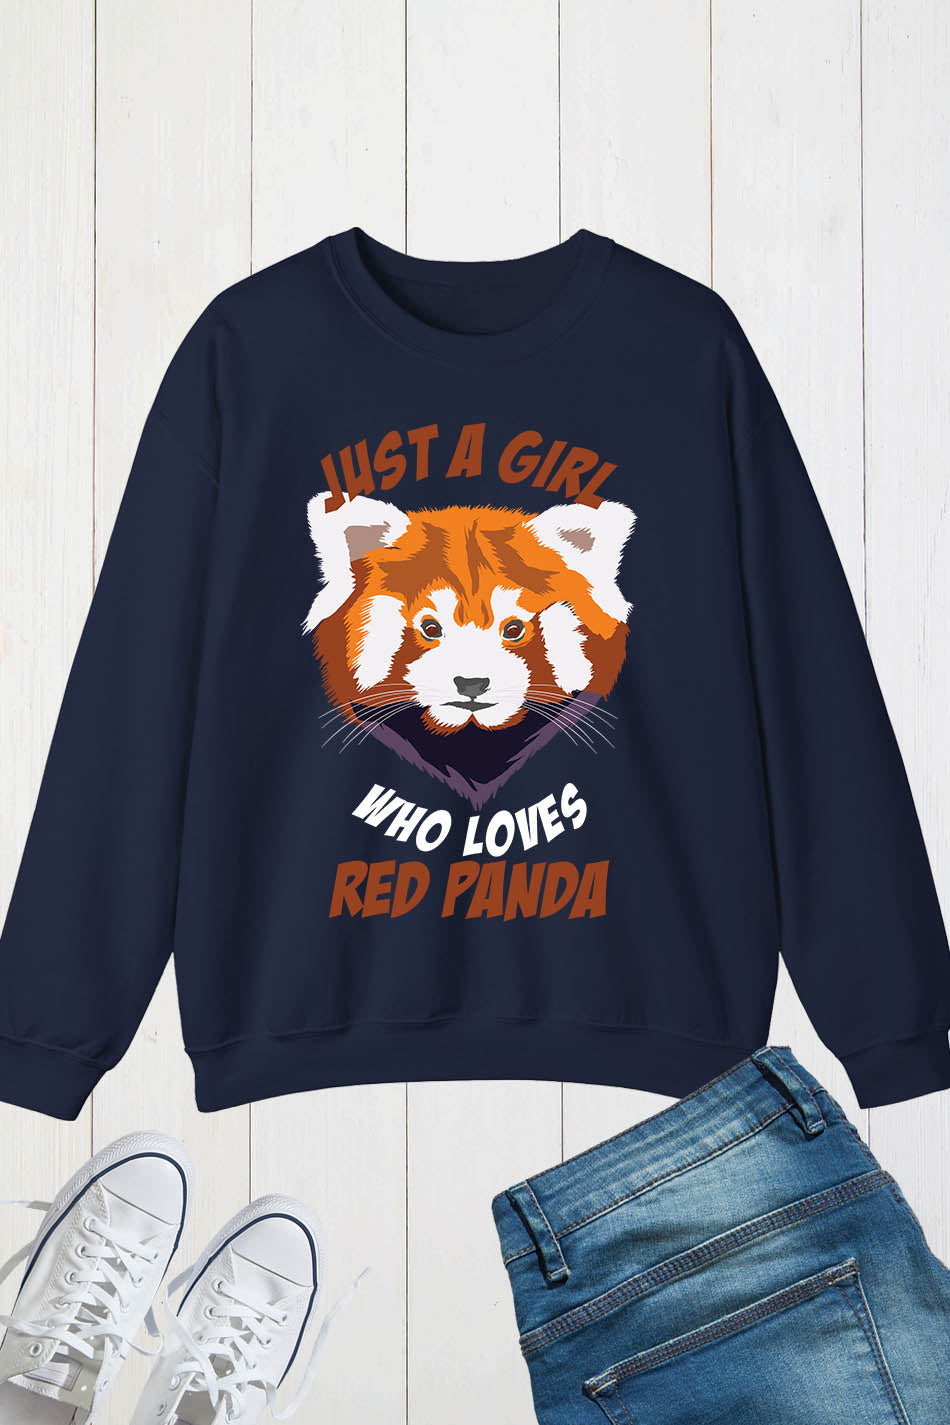 Just a Girl Who Loves Red Panda Sweatshirt